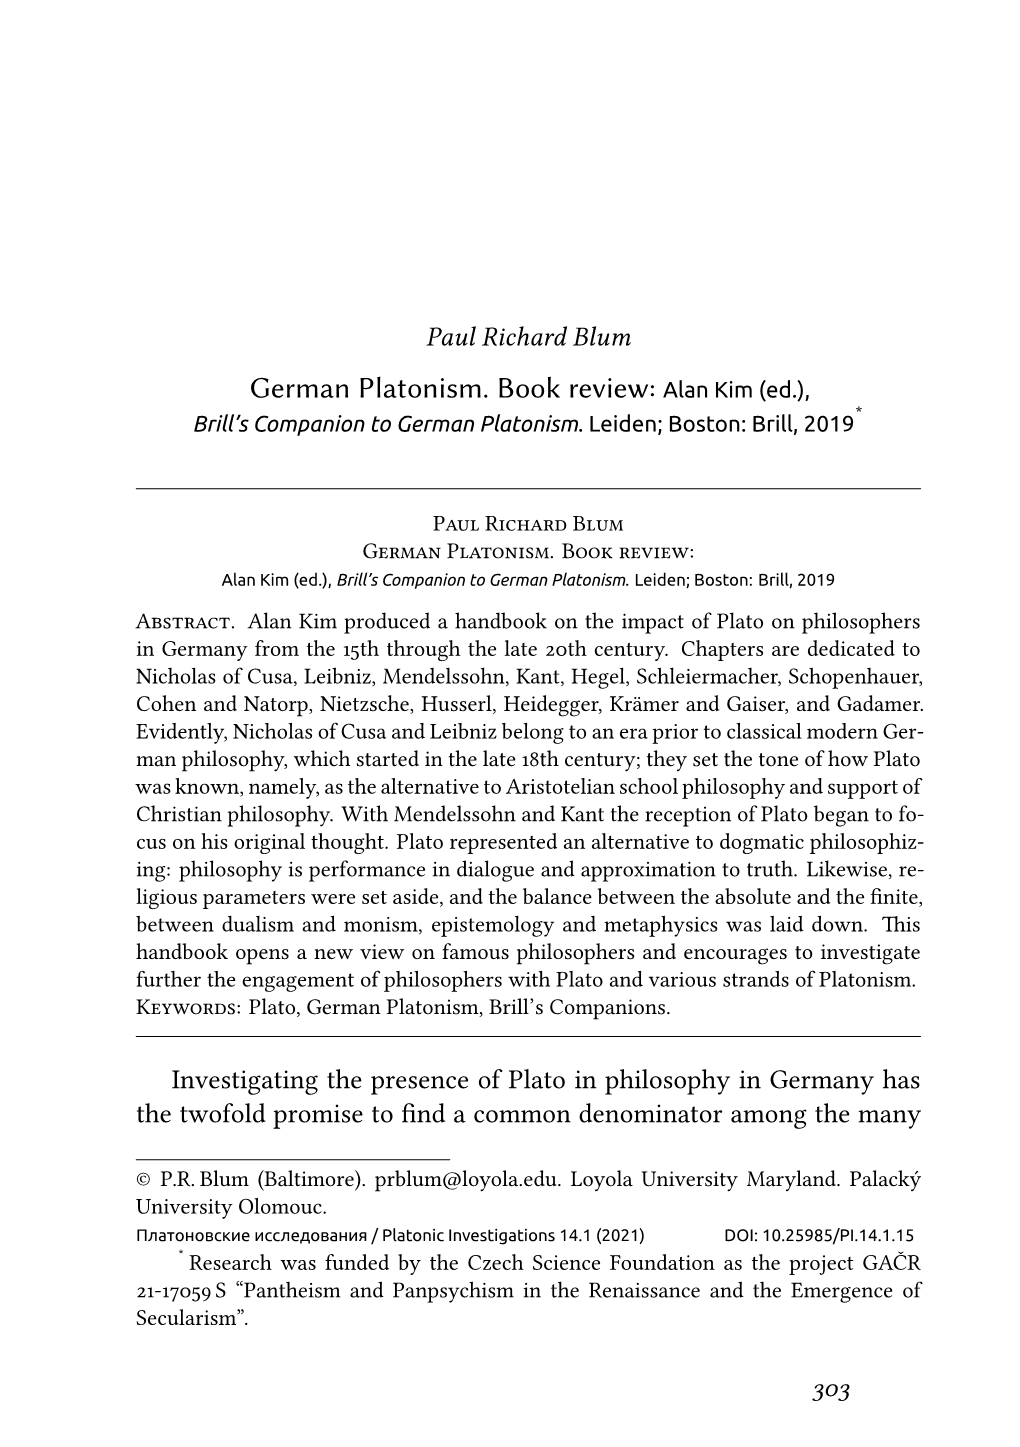 German Platonism. Book Review: Alan Kim (Ed.), Brill’S Companion to German Platonism